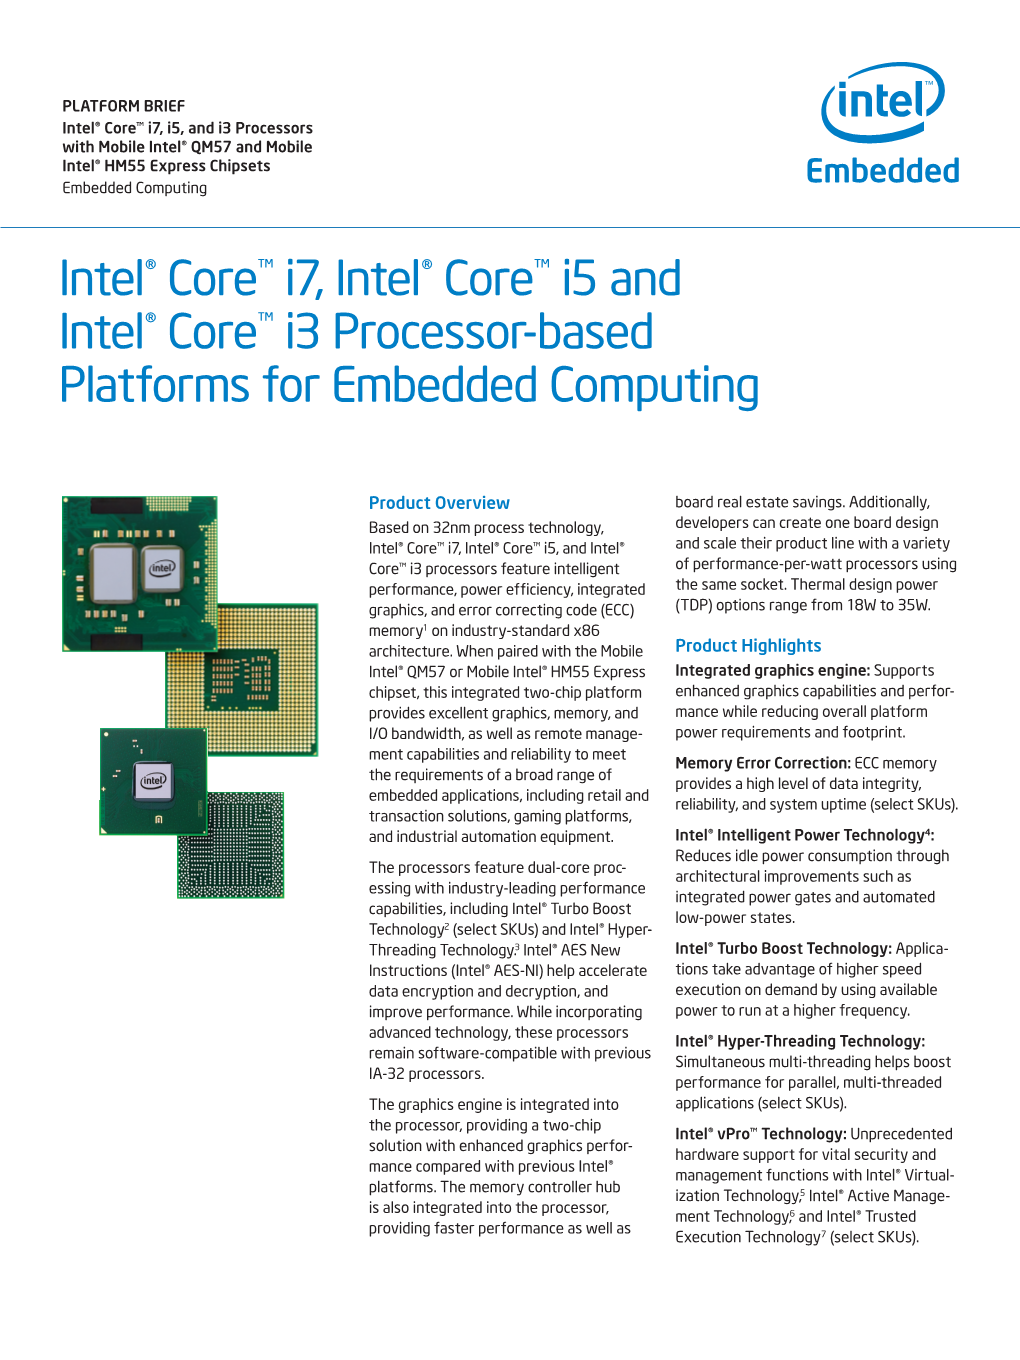 Intel® Core™ I7, Intel® Core™ I5 and Intel® Core™ I3 Processor-Based Platforms for Embedded Computing